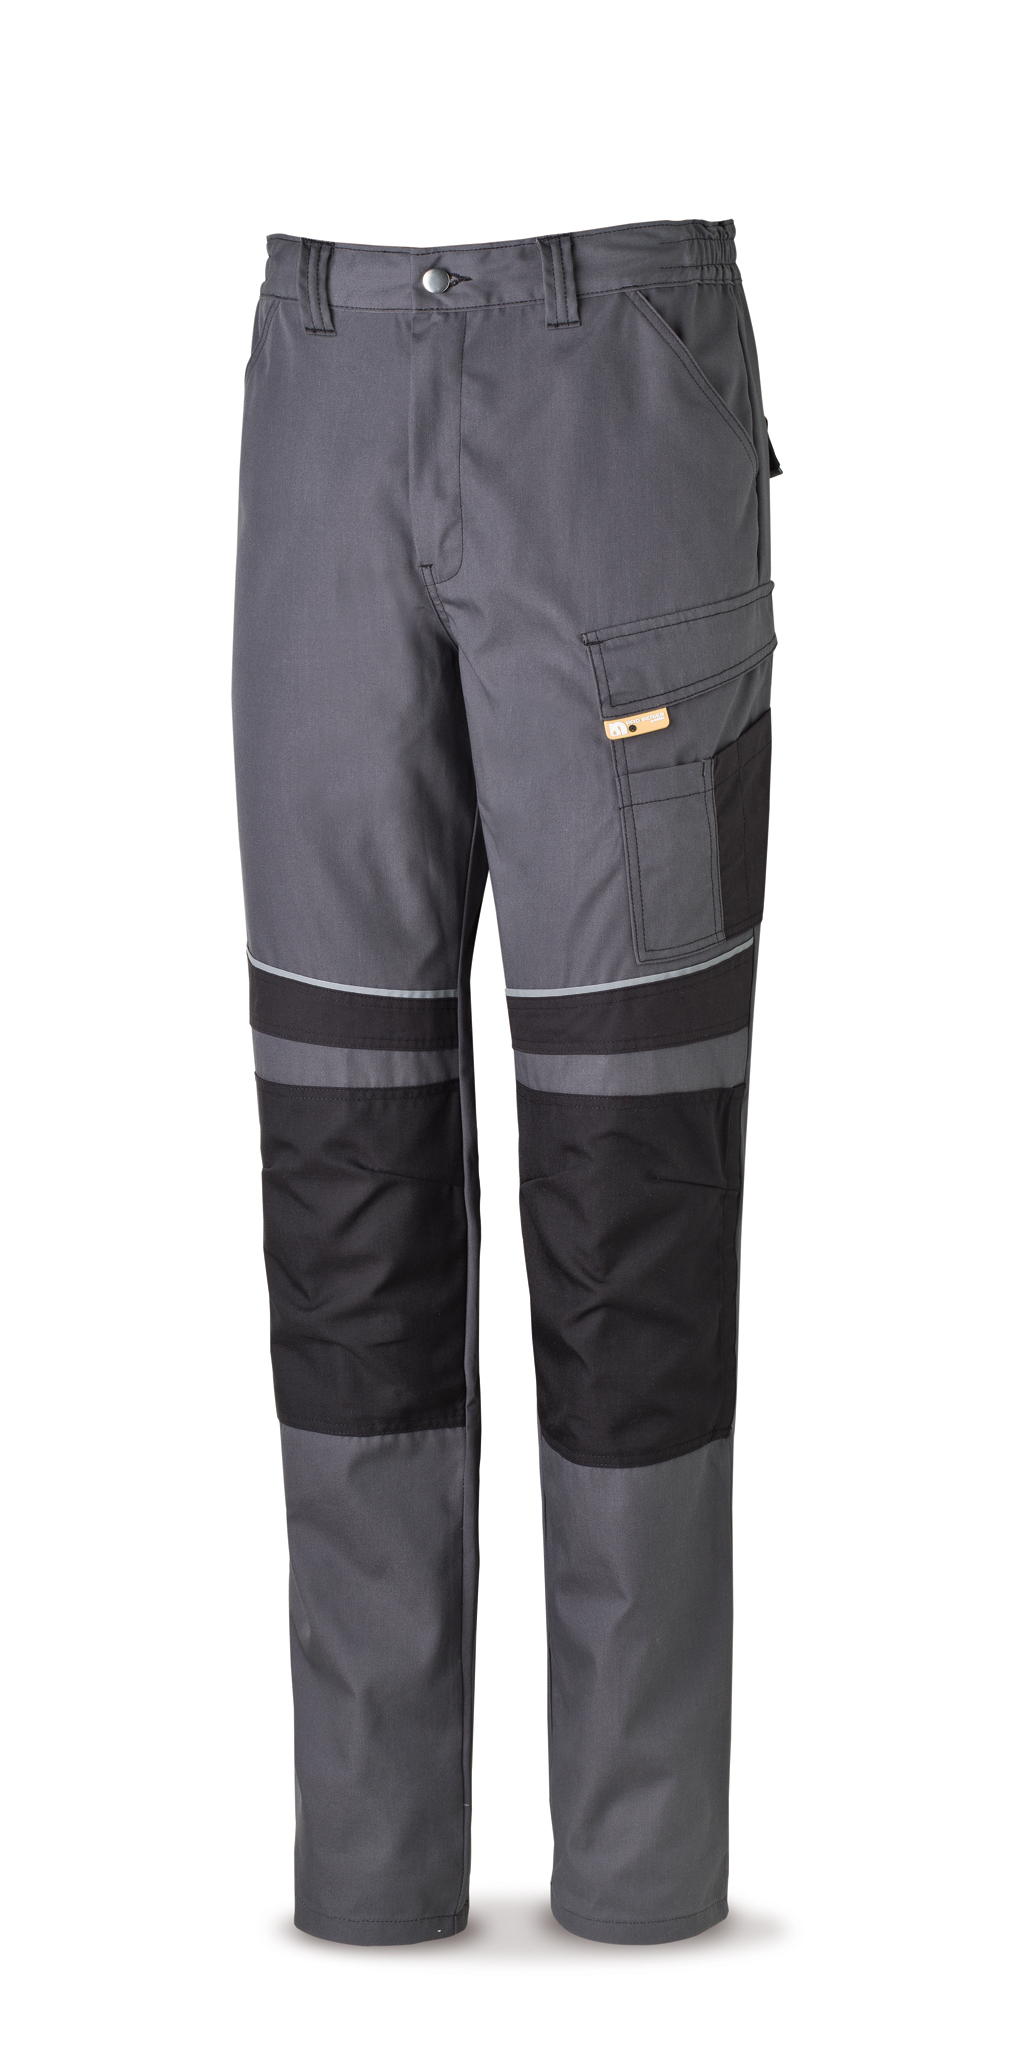 588-PNEG Vestuario Laboral Pro Series Pantalón CANVAS gris/negro poliéster/algodón 245 g. Multibolsillos